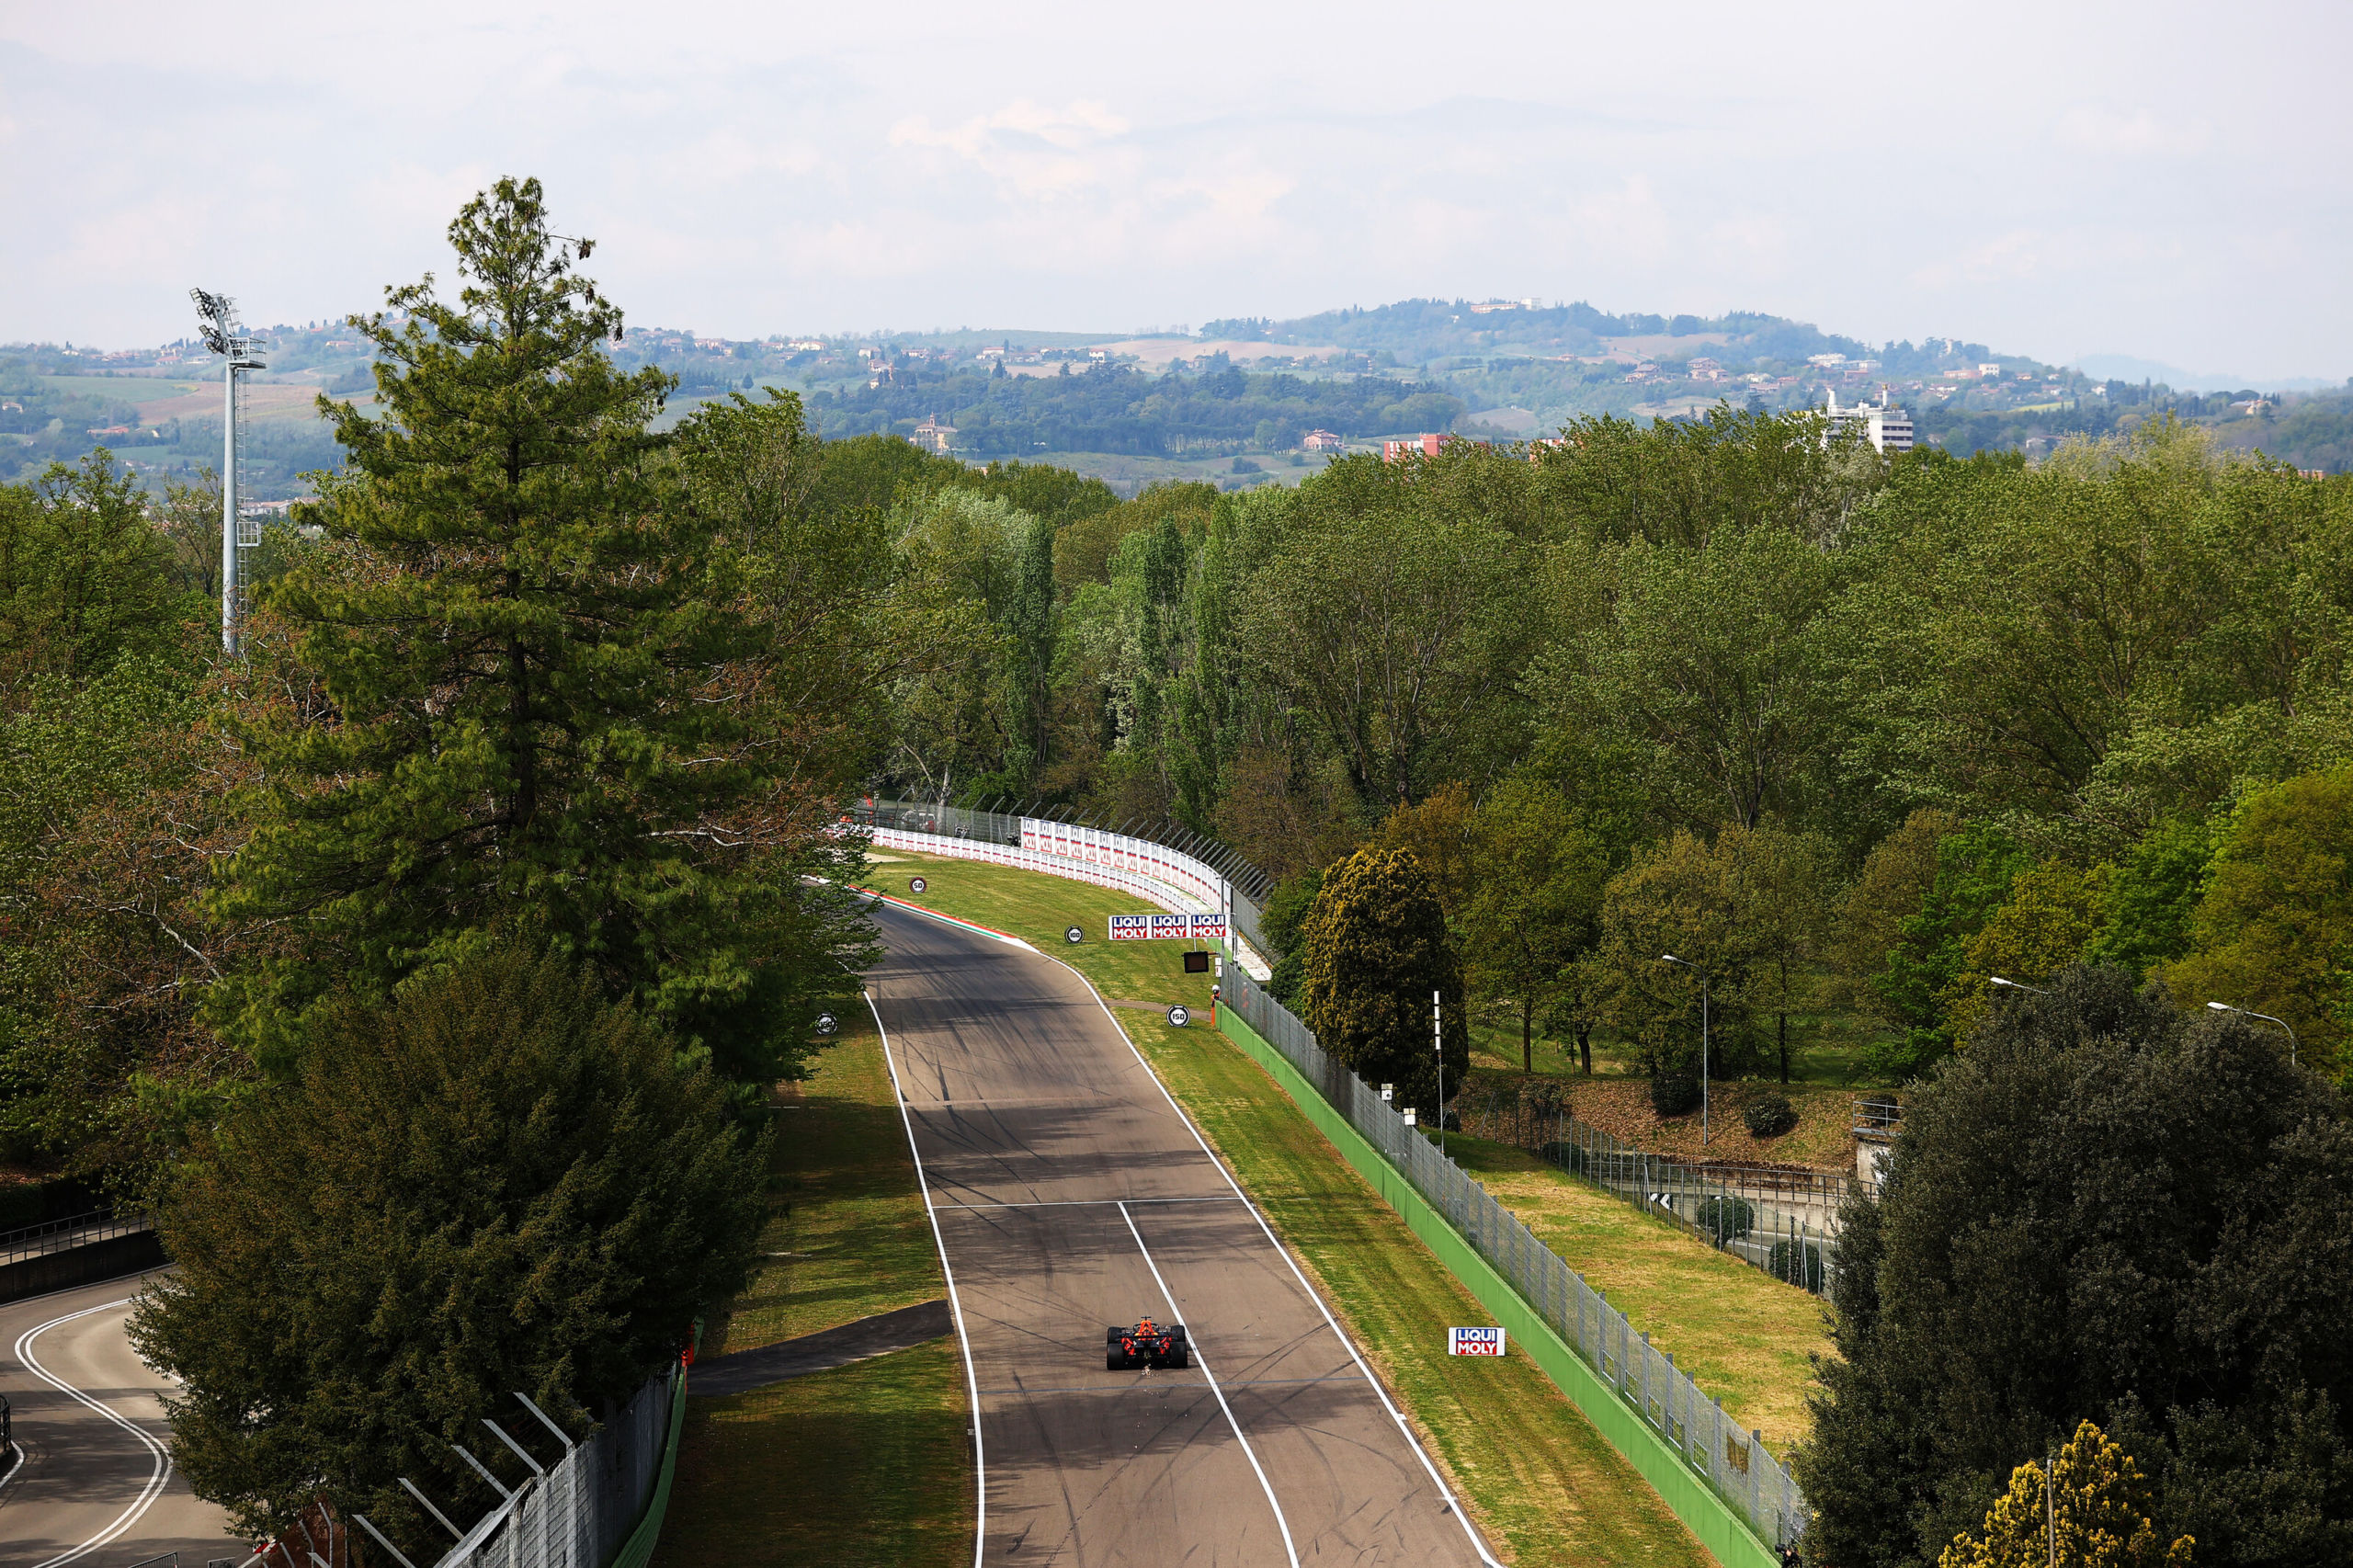 F1 Grand Prix Of Emilia Romagna Final Practice